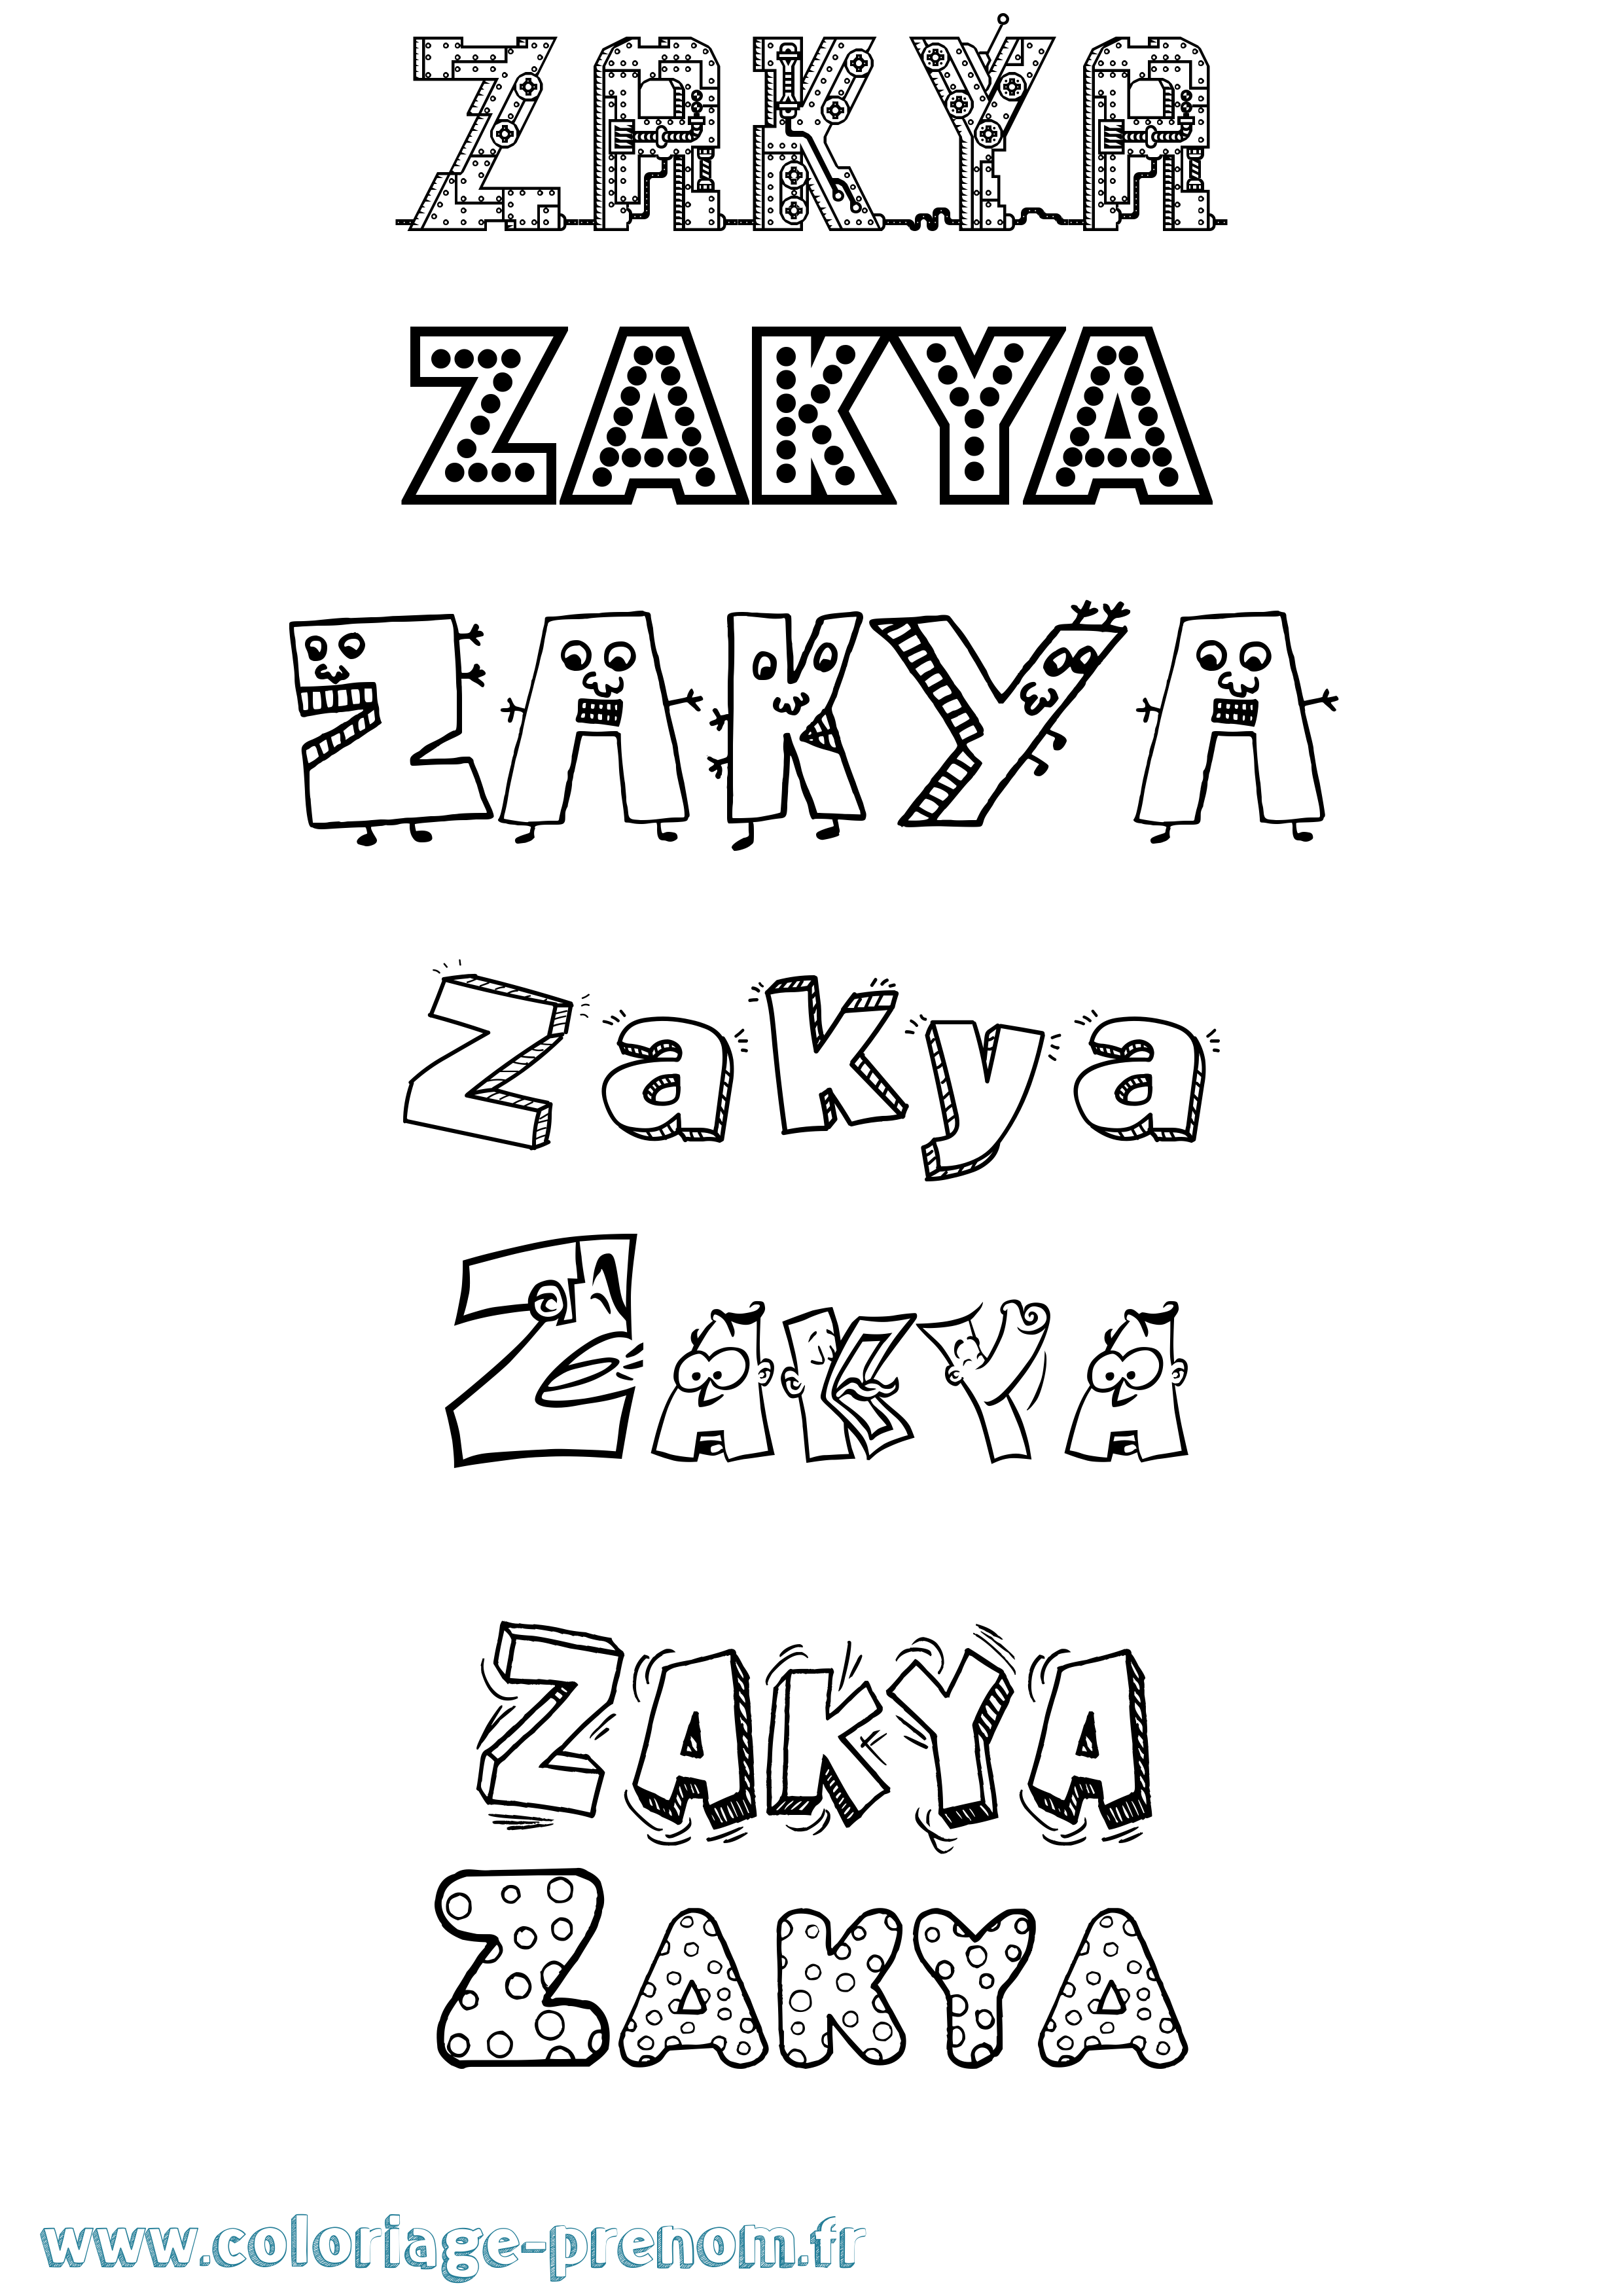 Coloriage prénom Zakya Fun